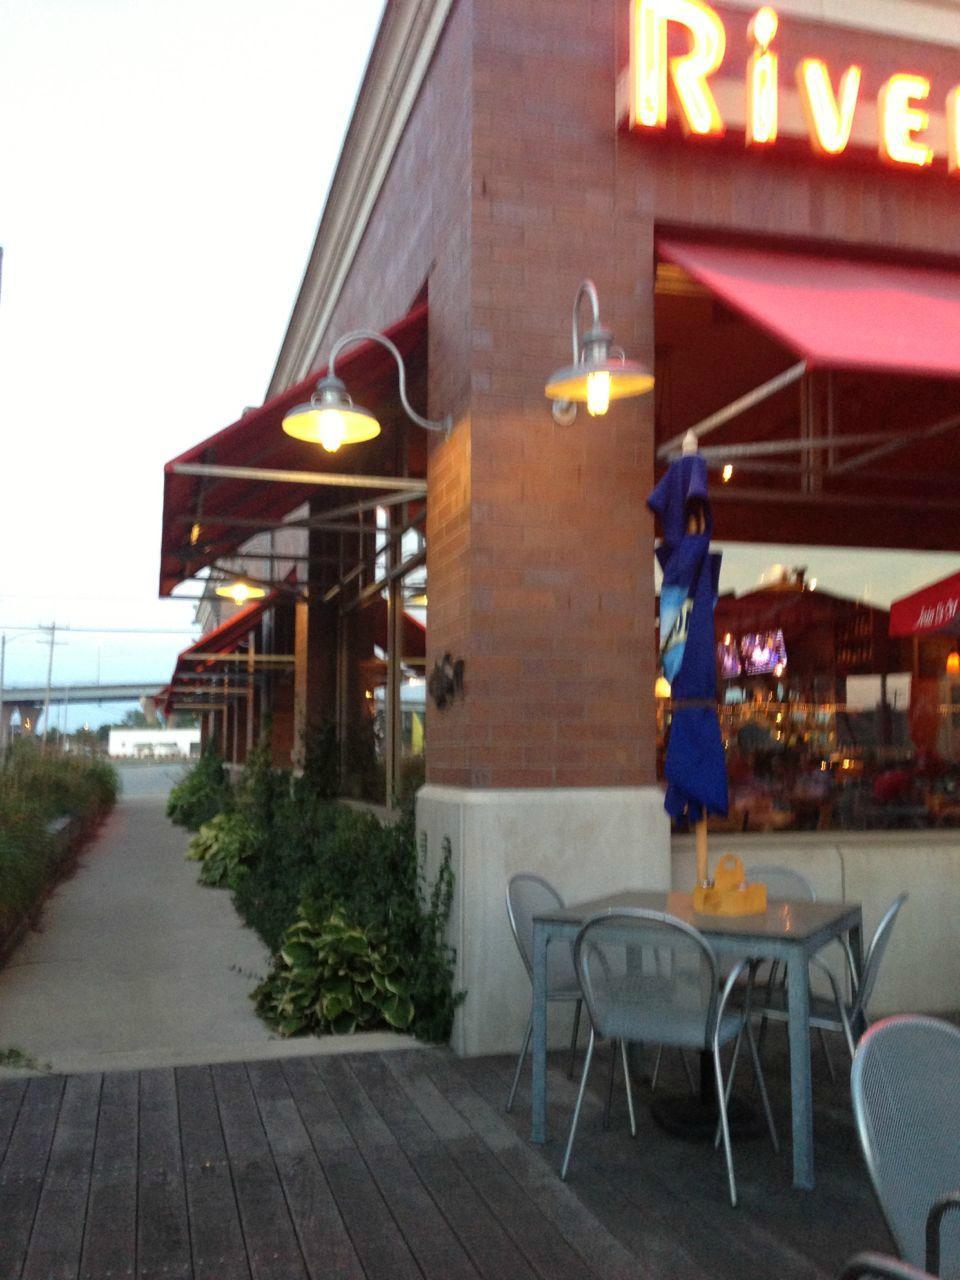 Riverfront Pizzeria Bar & Grll